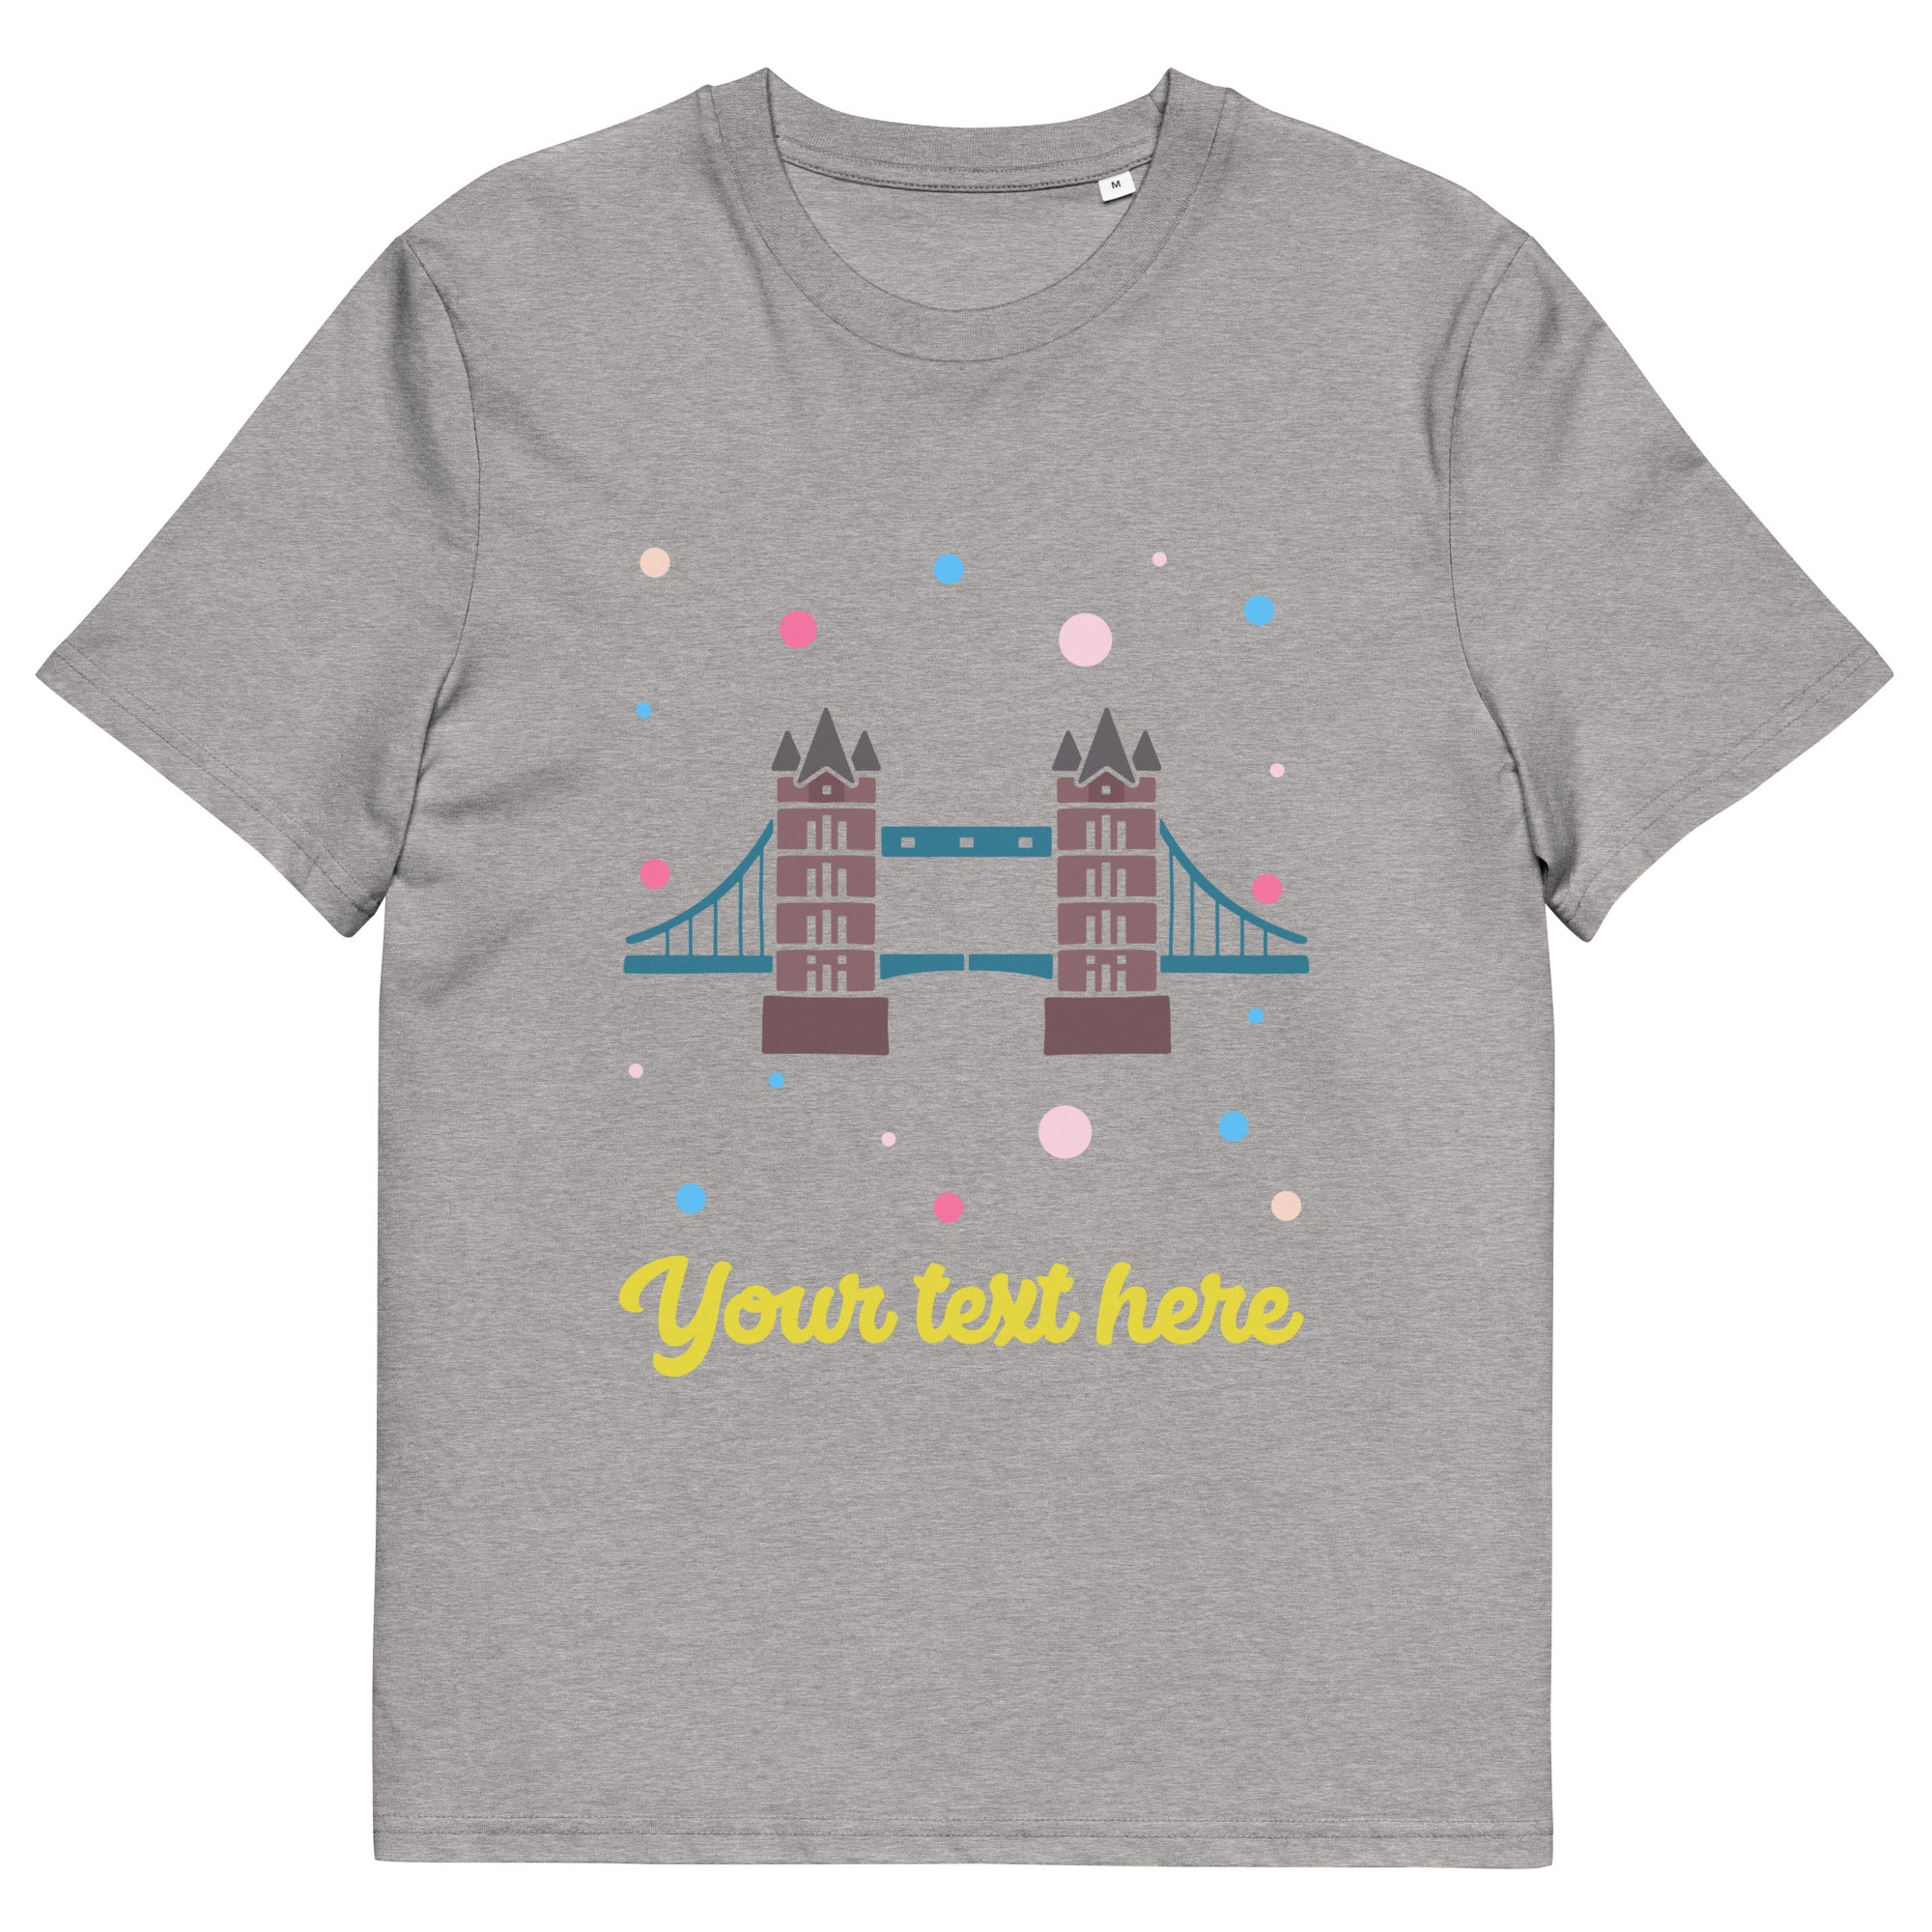 Personalised Custom Text - Organic Cotton Adults Unisex T-Shirt - London Doodles - Tower Bridge - Heath Grey